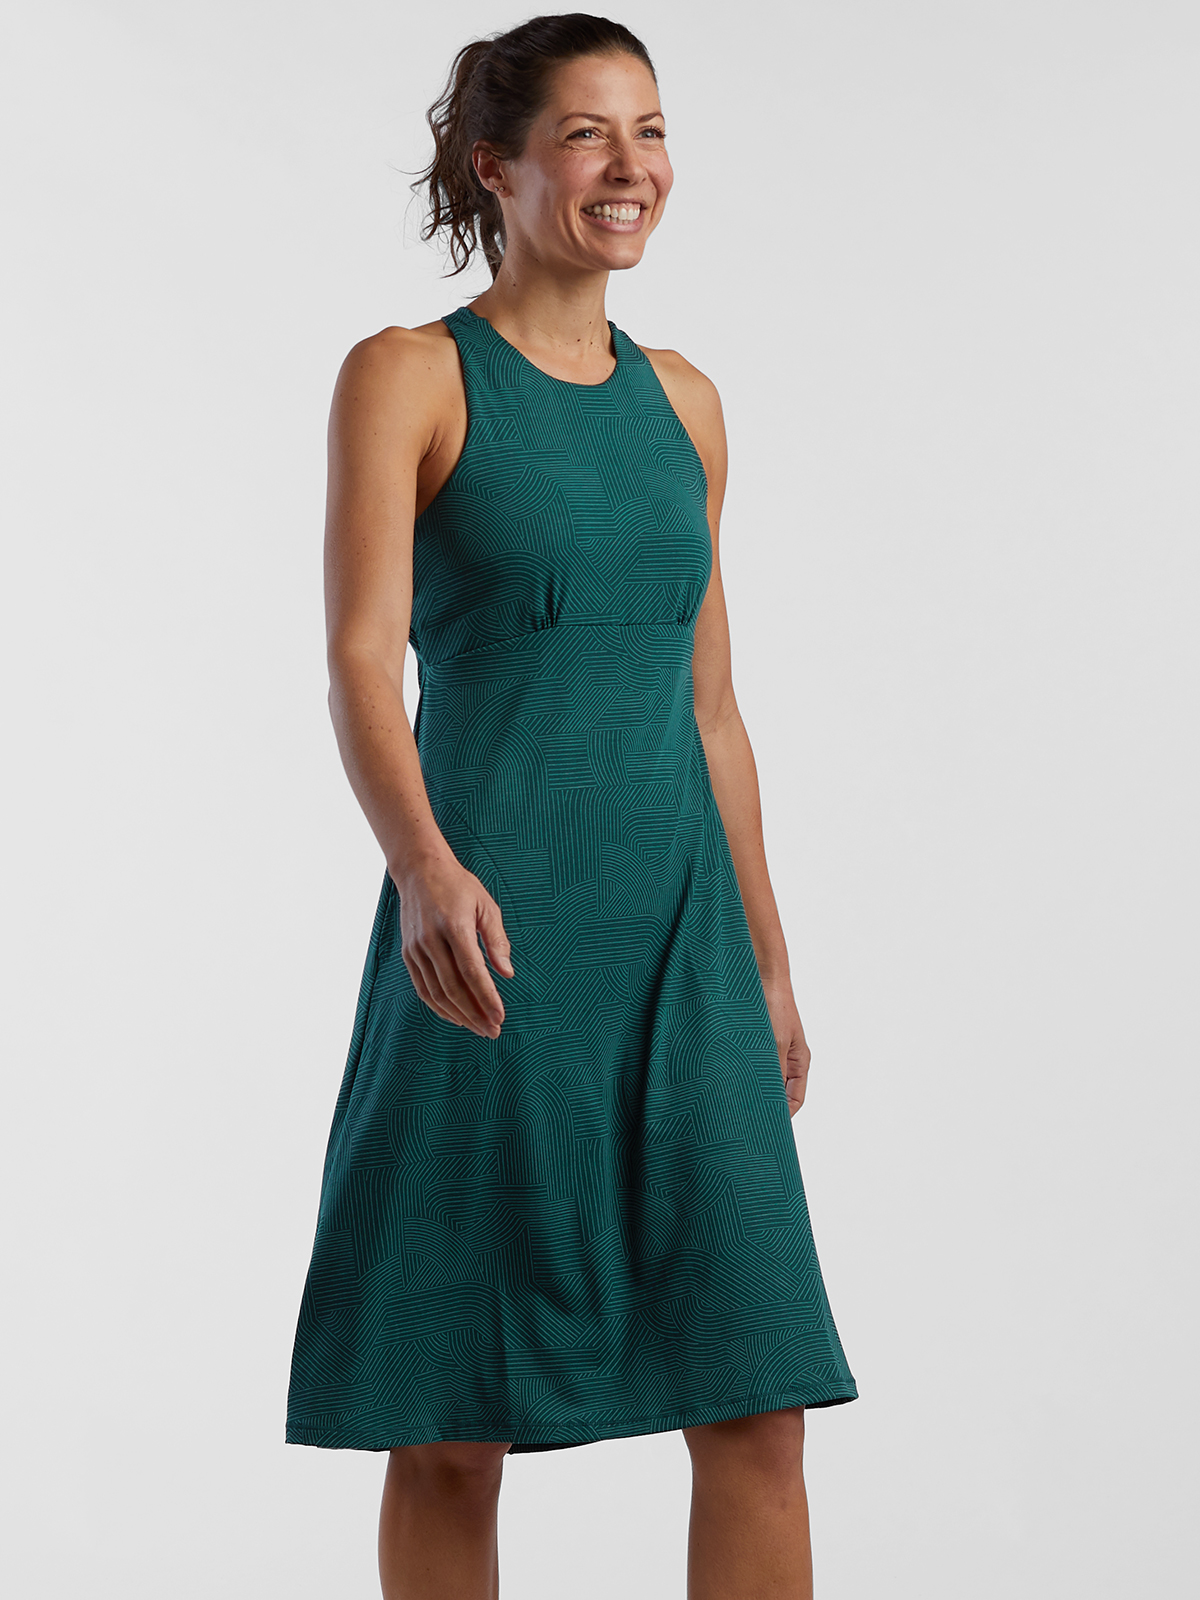 HDE Women's Travel Dress Sleeveless Summer Dress with Built-in Bra